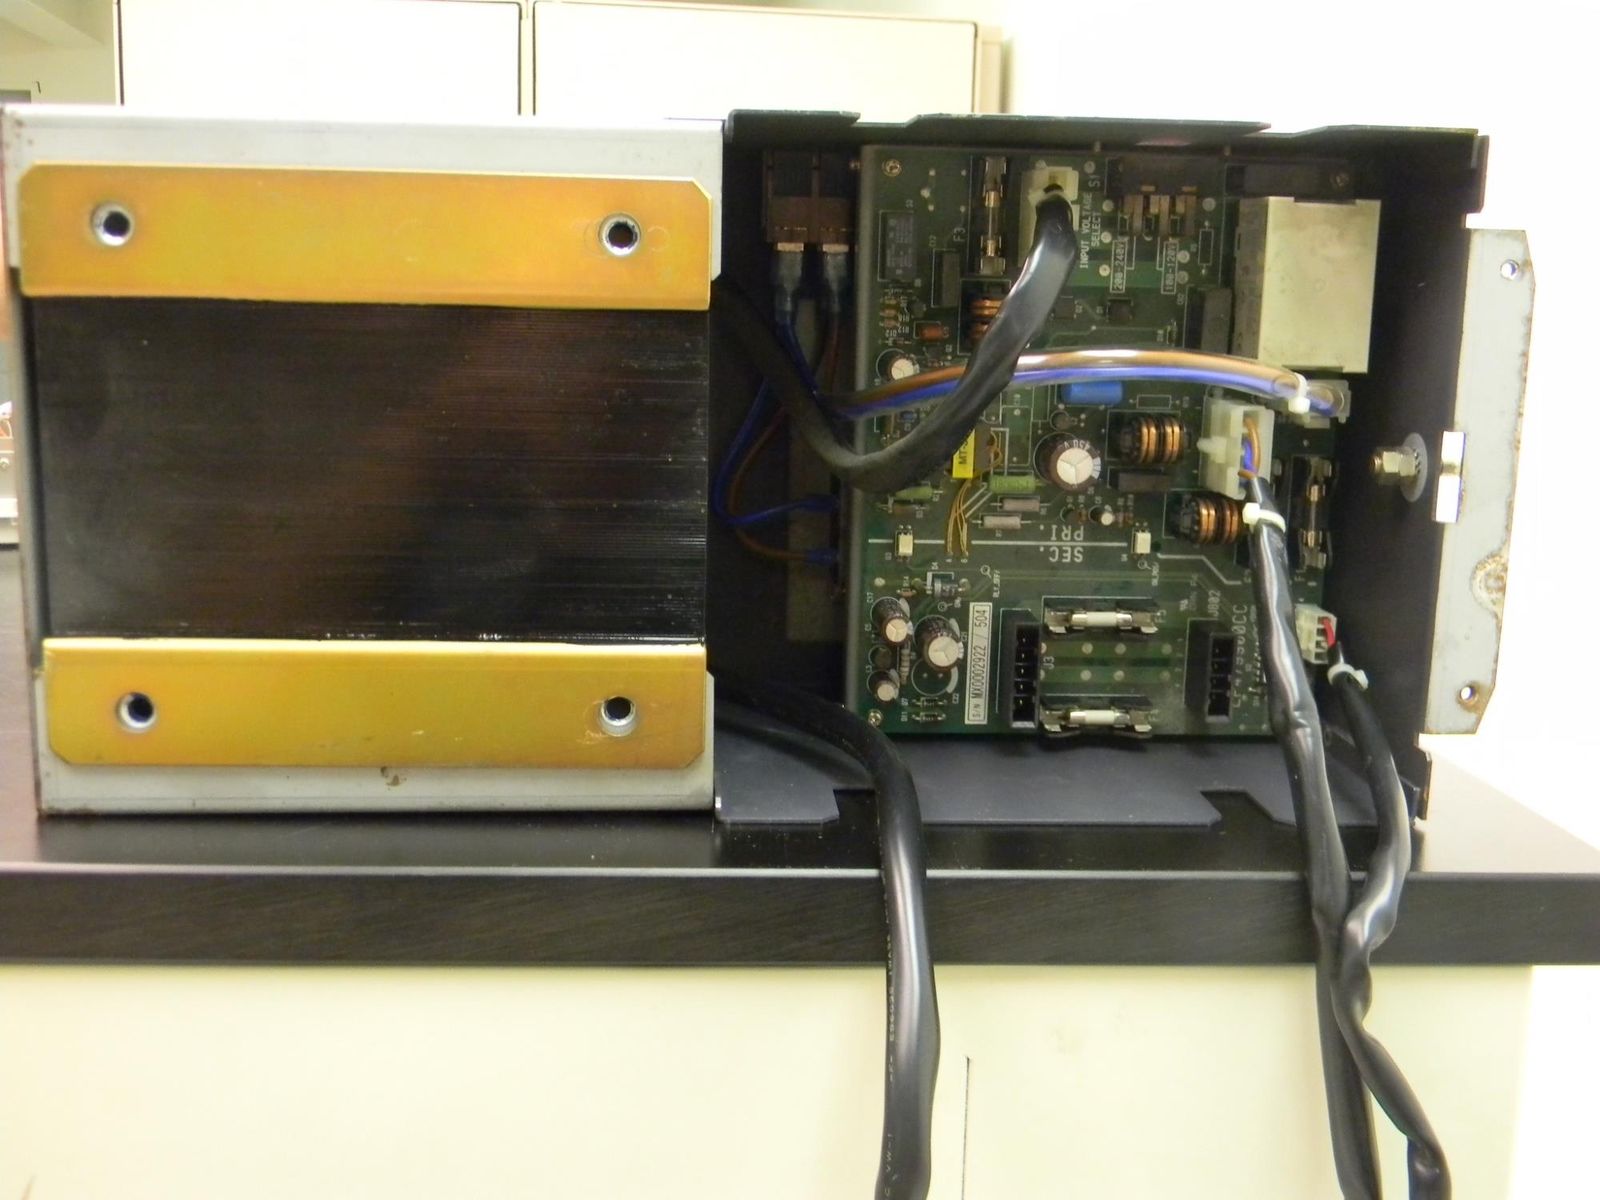 Aloka Prosound Ultrasound Scanner SSD 3500SV POWER SUPPLY  EP479900CC  EU-6029B DIAGNOSTIC ULTRASOUND MACHINES FOR SALE